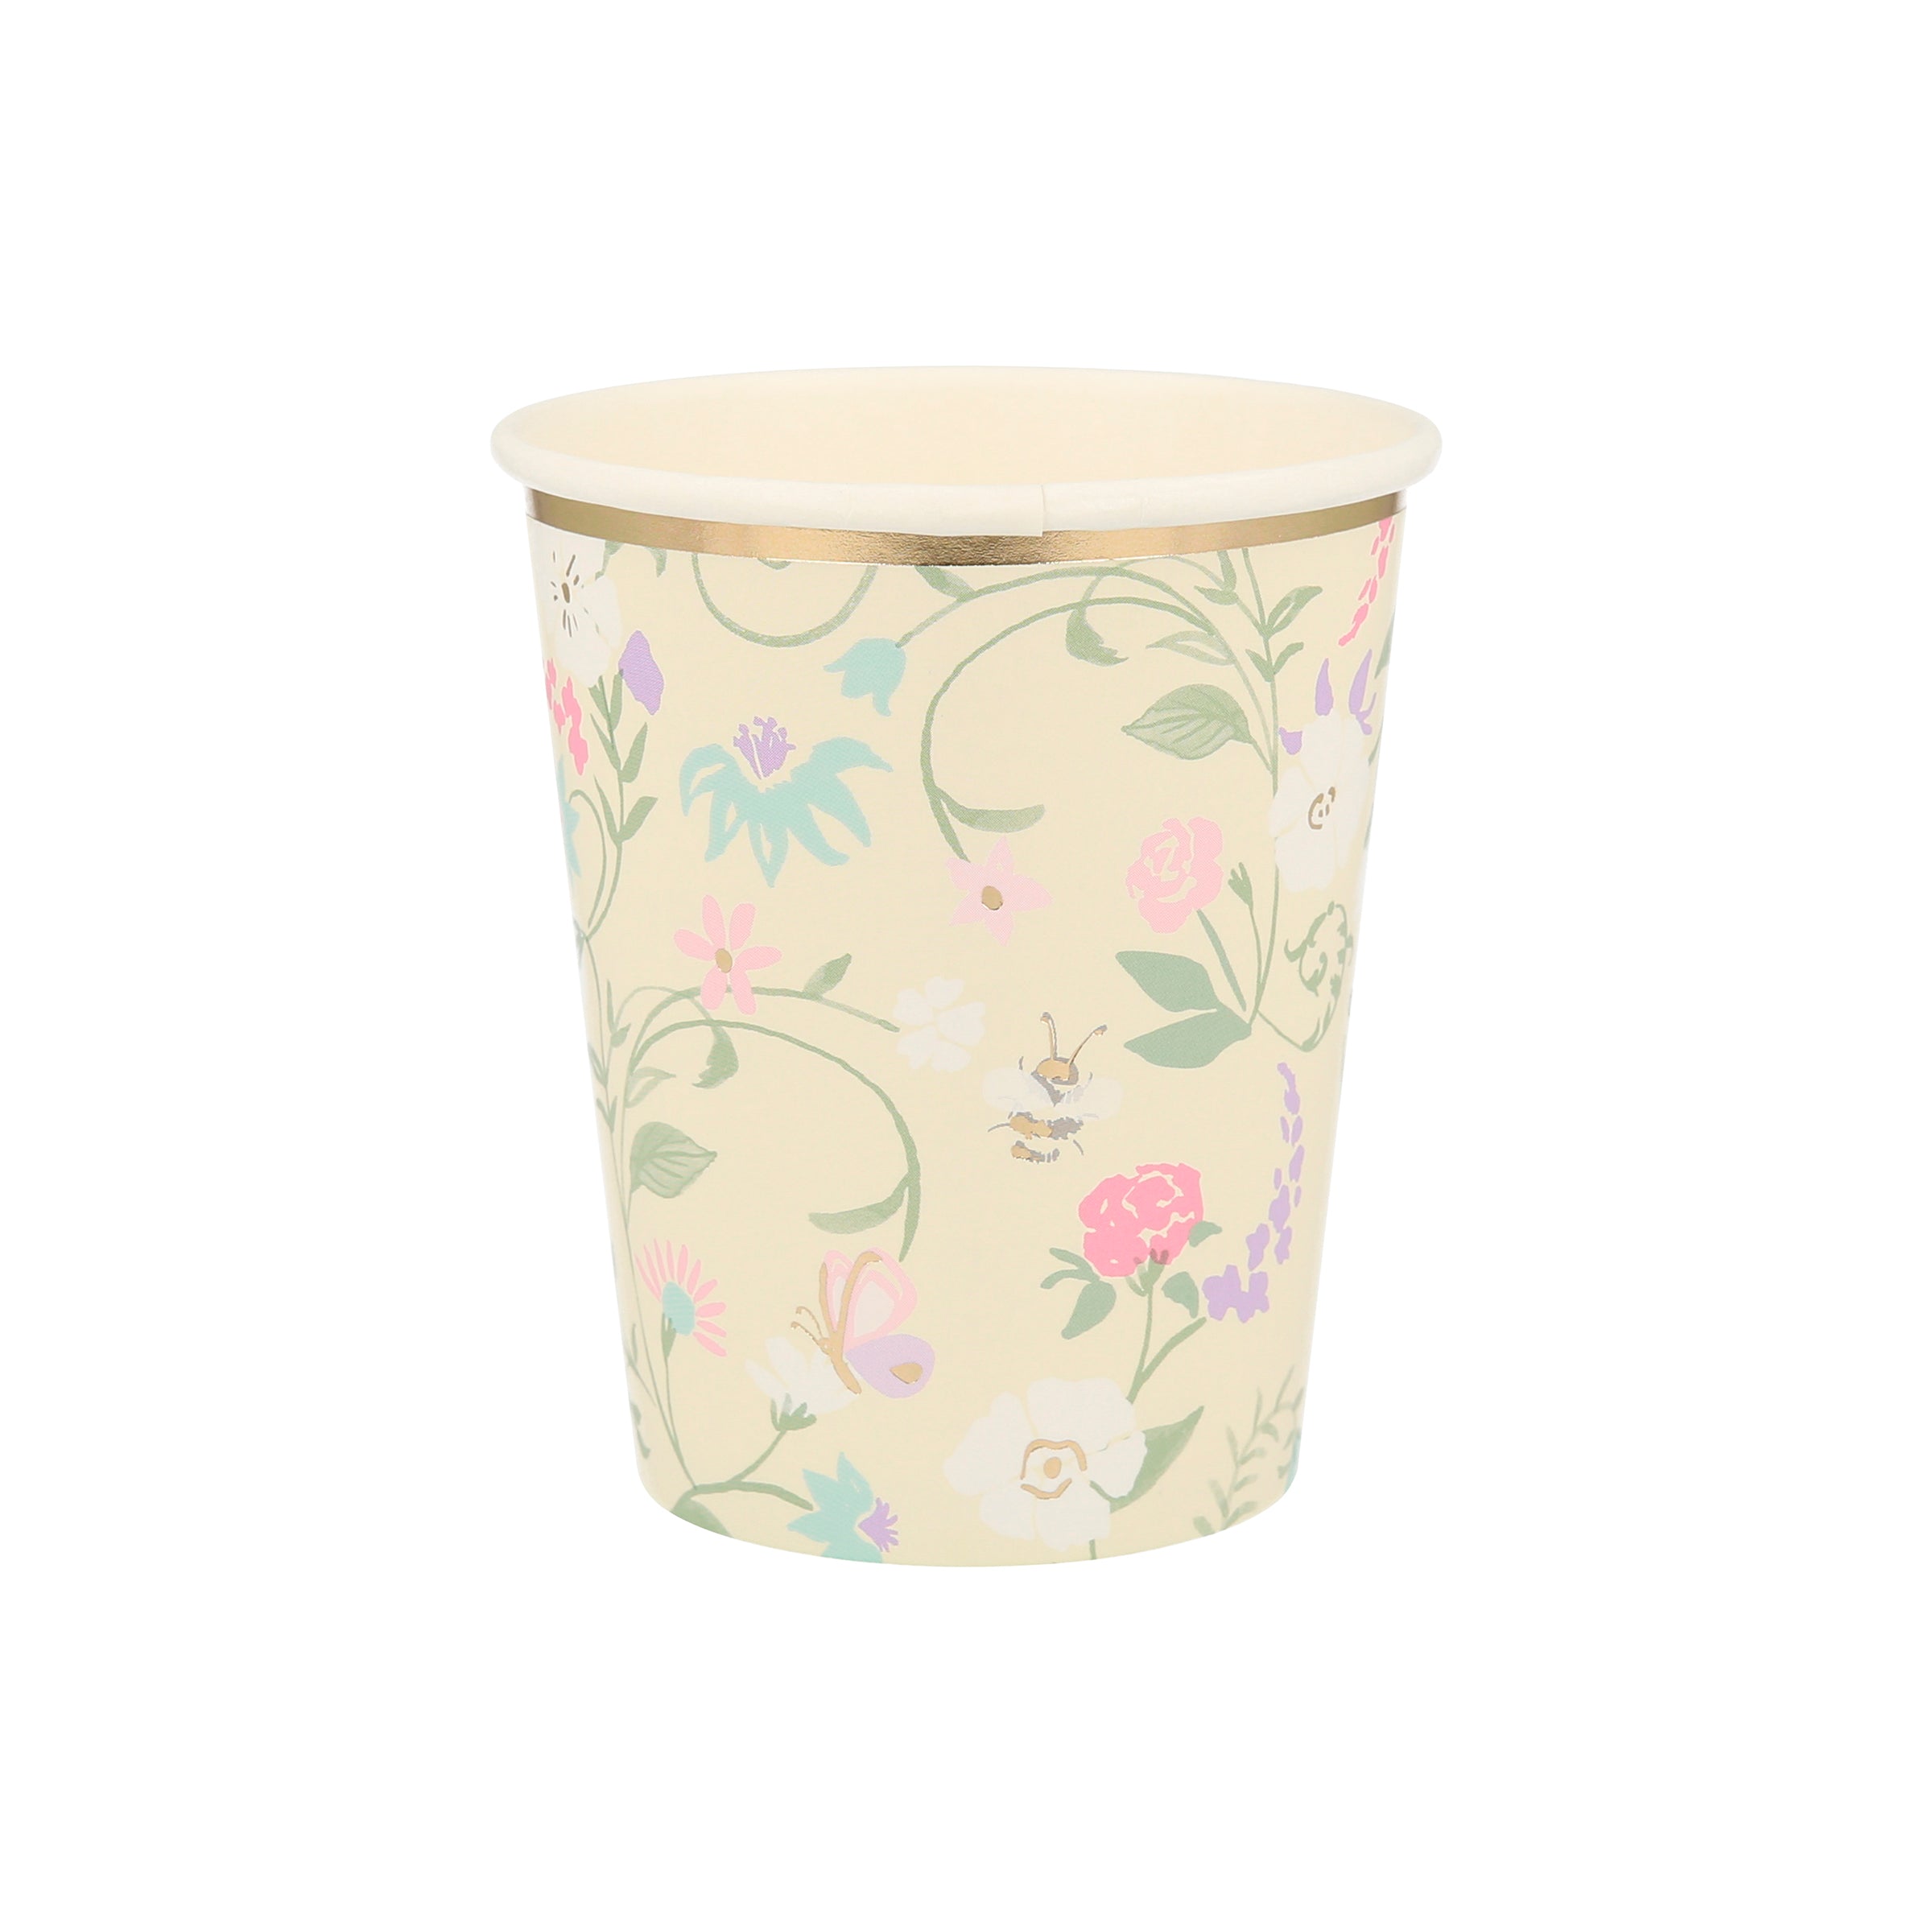 Laduree Paris Floral Cups